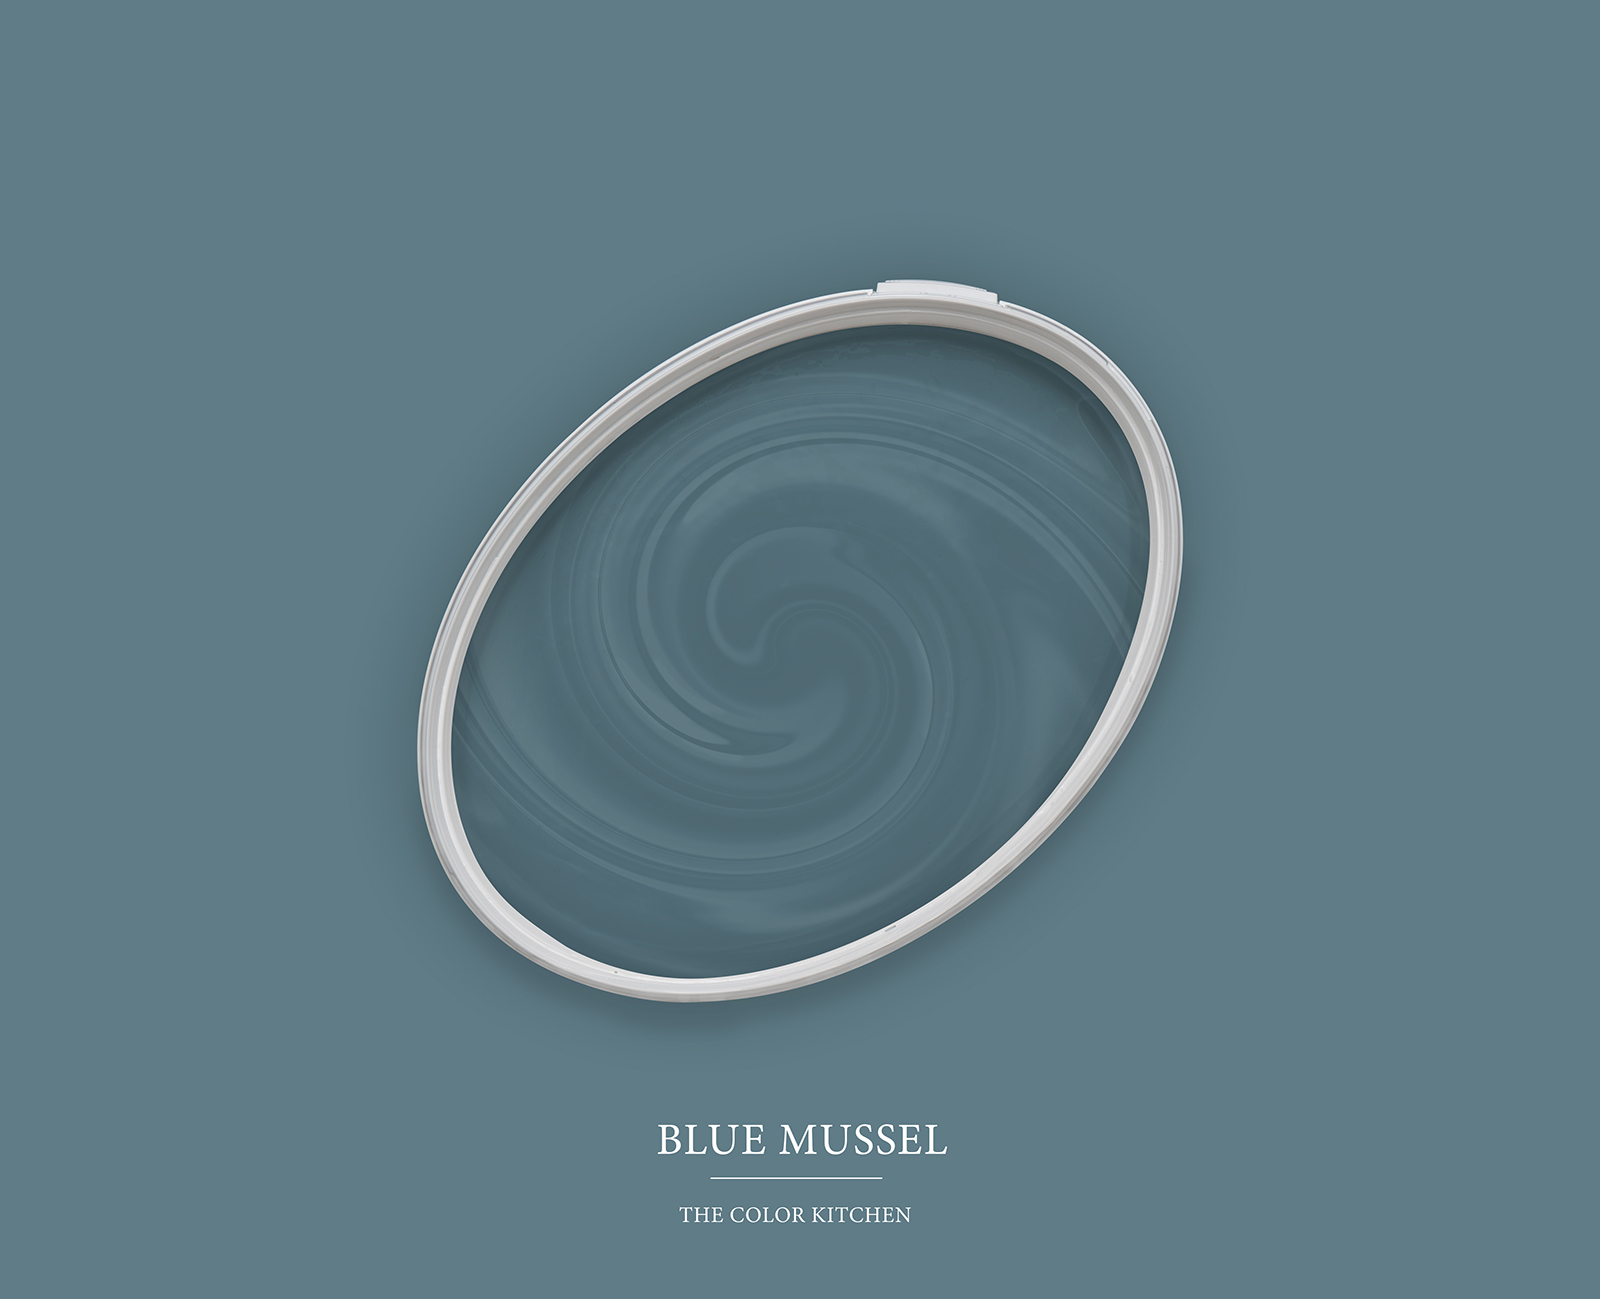         Wandfarbe TCK3011 »Blue Mussel« in ruhigem Blaugrau – 2,5 Liter
    